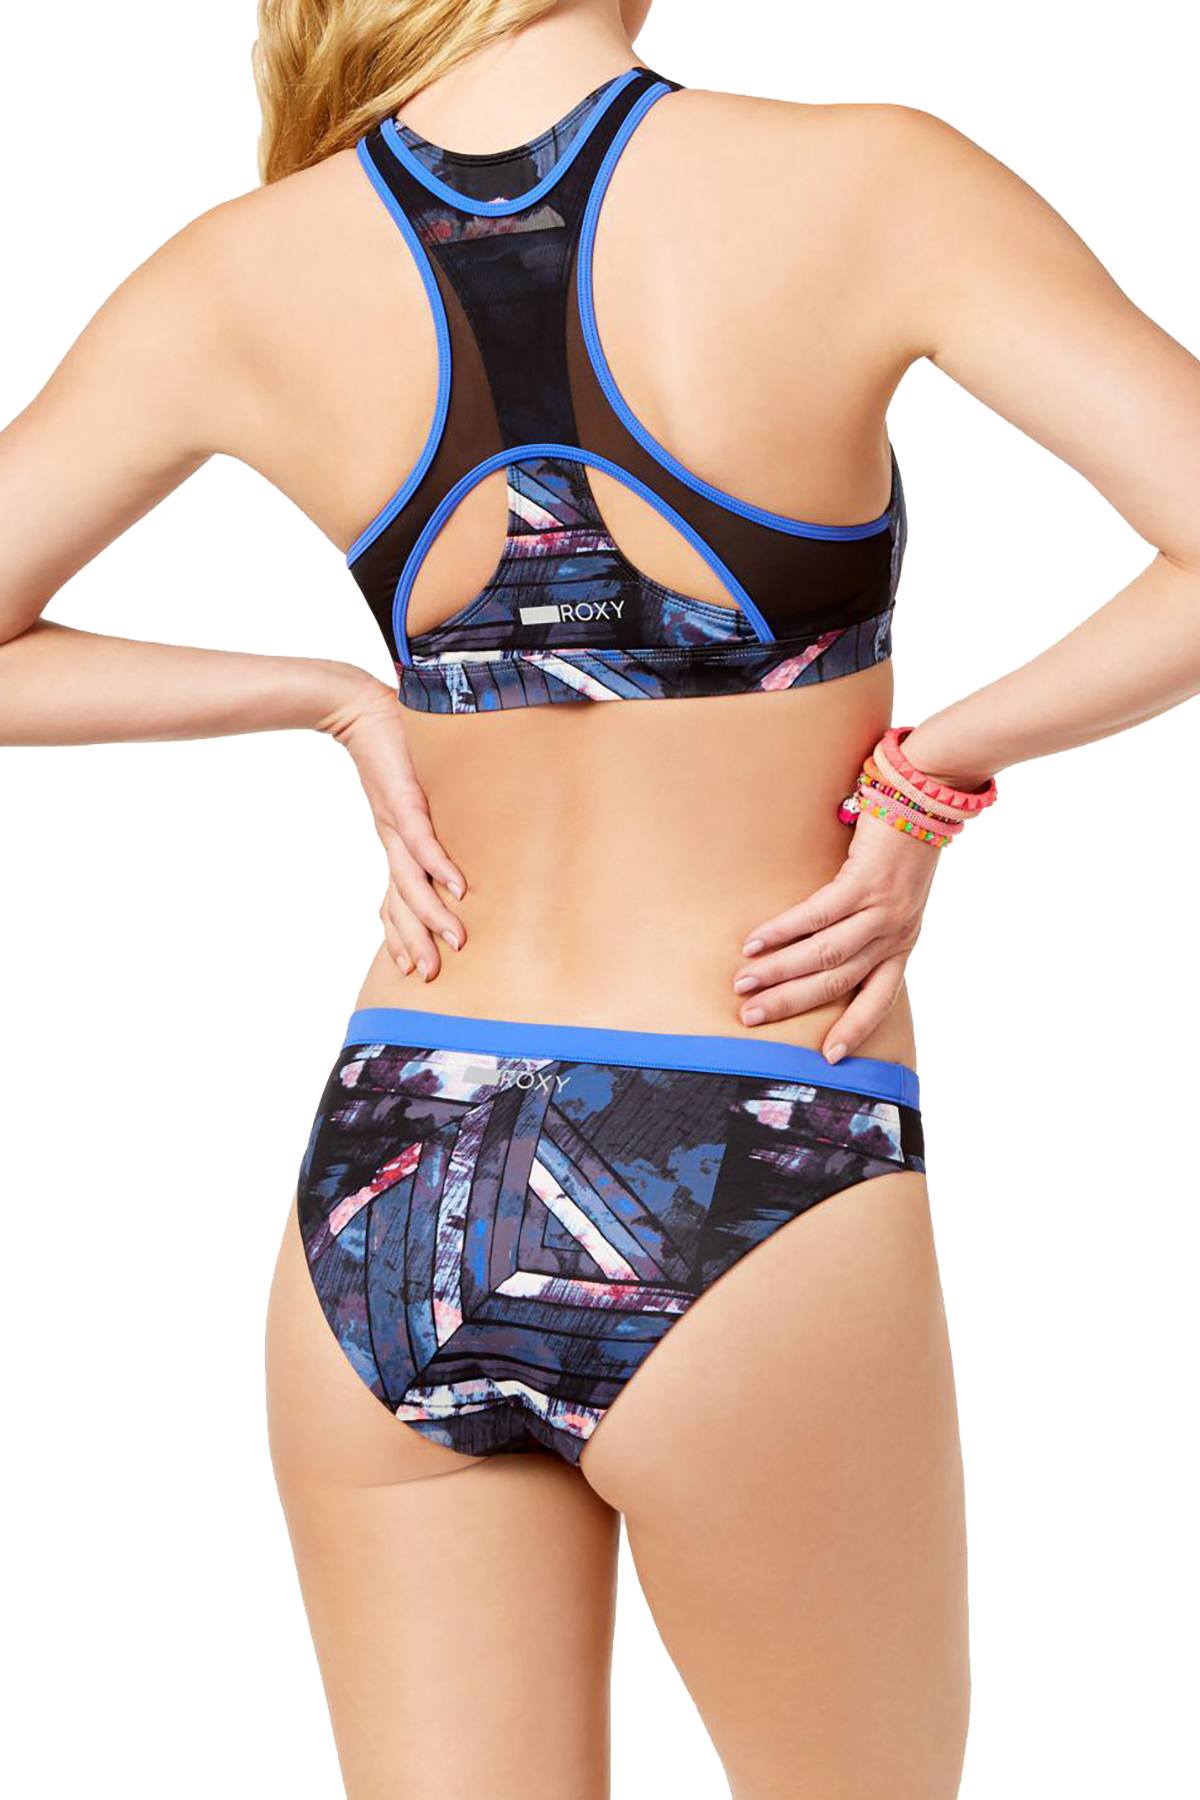 Roxy 'Keep It Scooter' Mesh Side Bikini Bottom in Anthracite Blur Paint